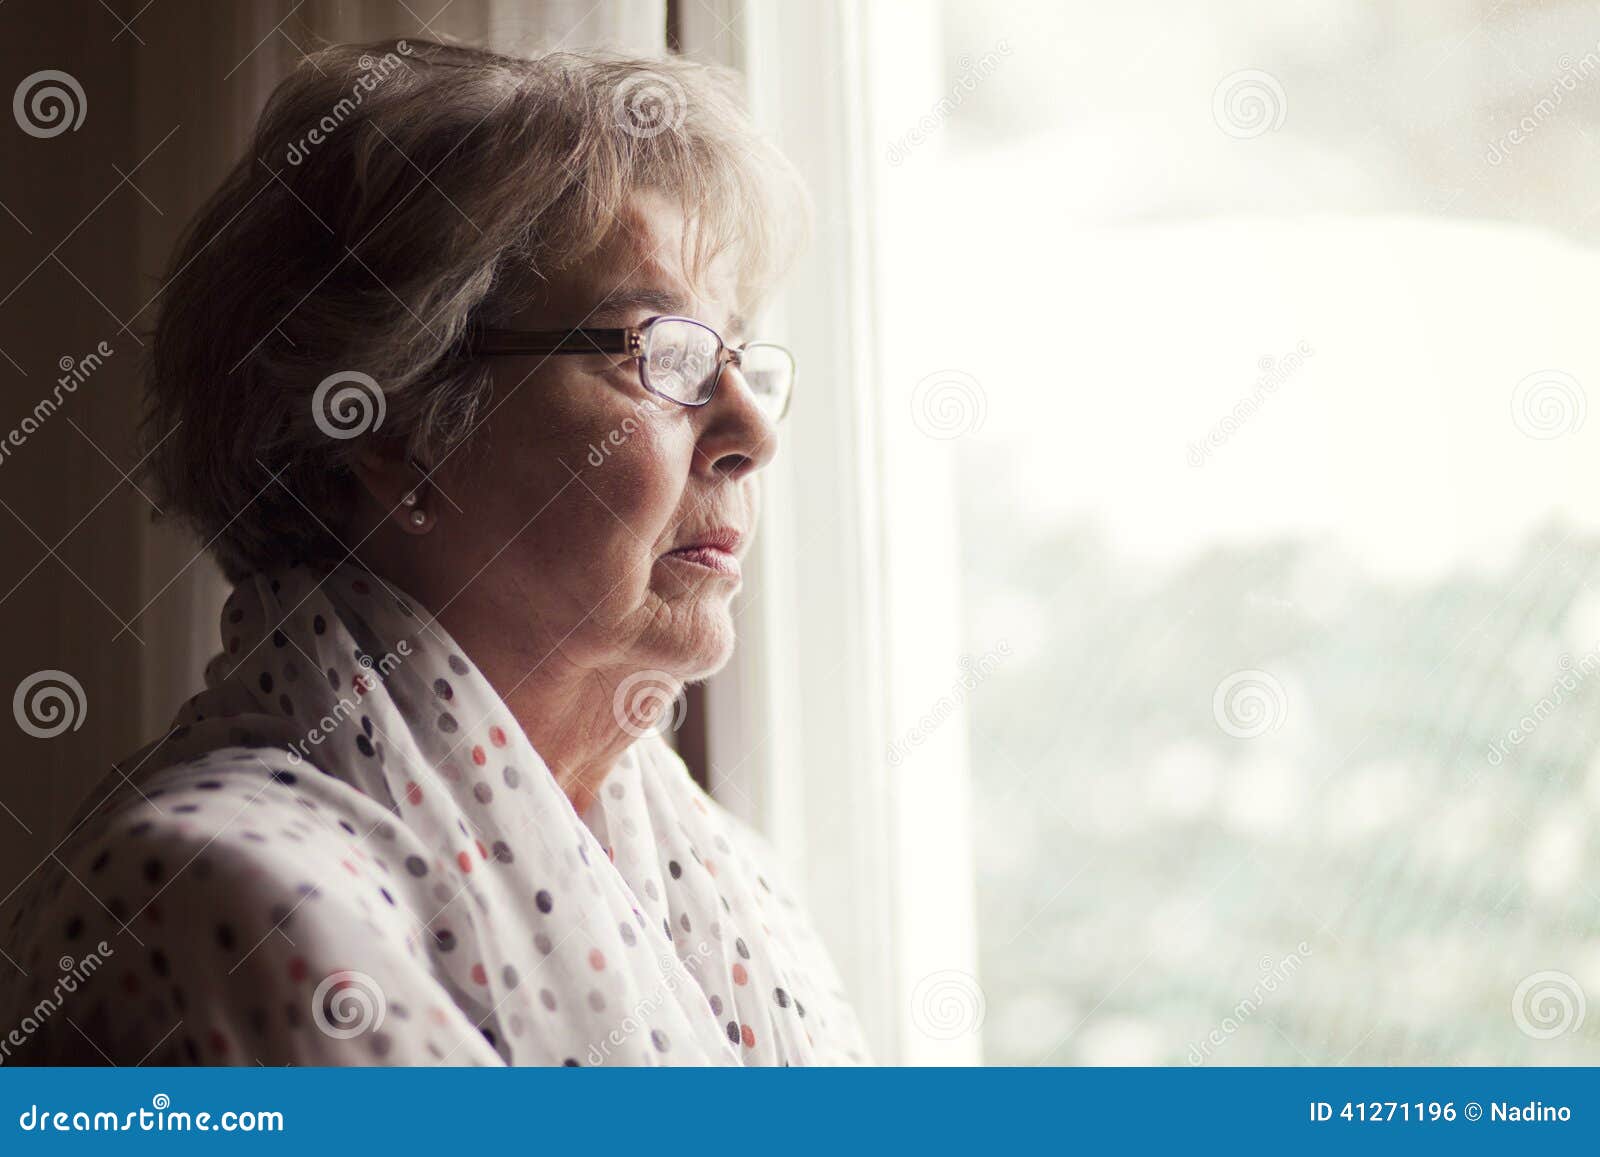 depression of a senior woman